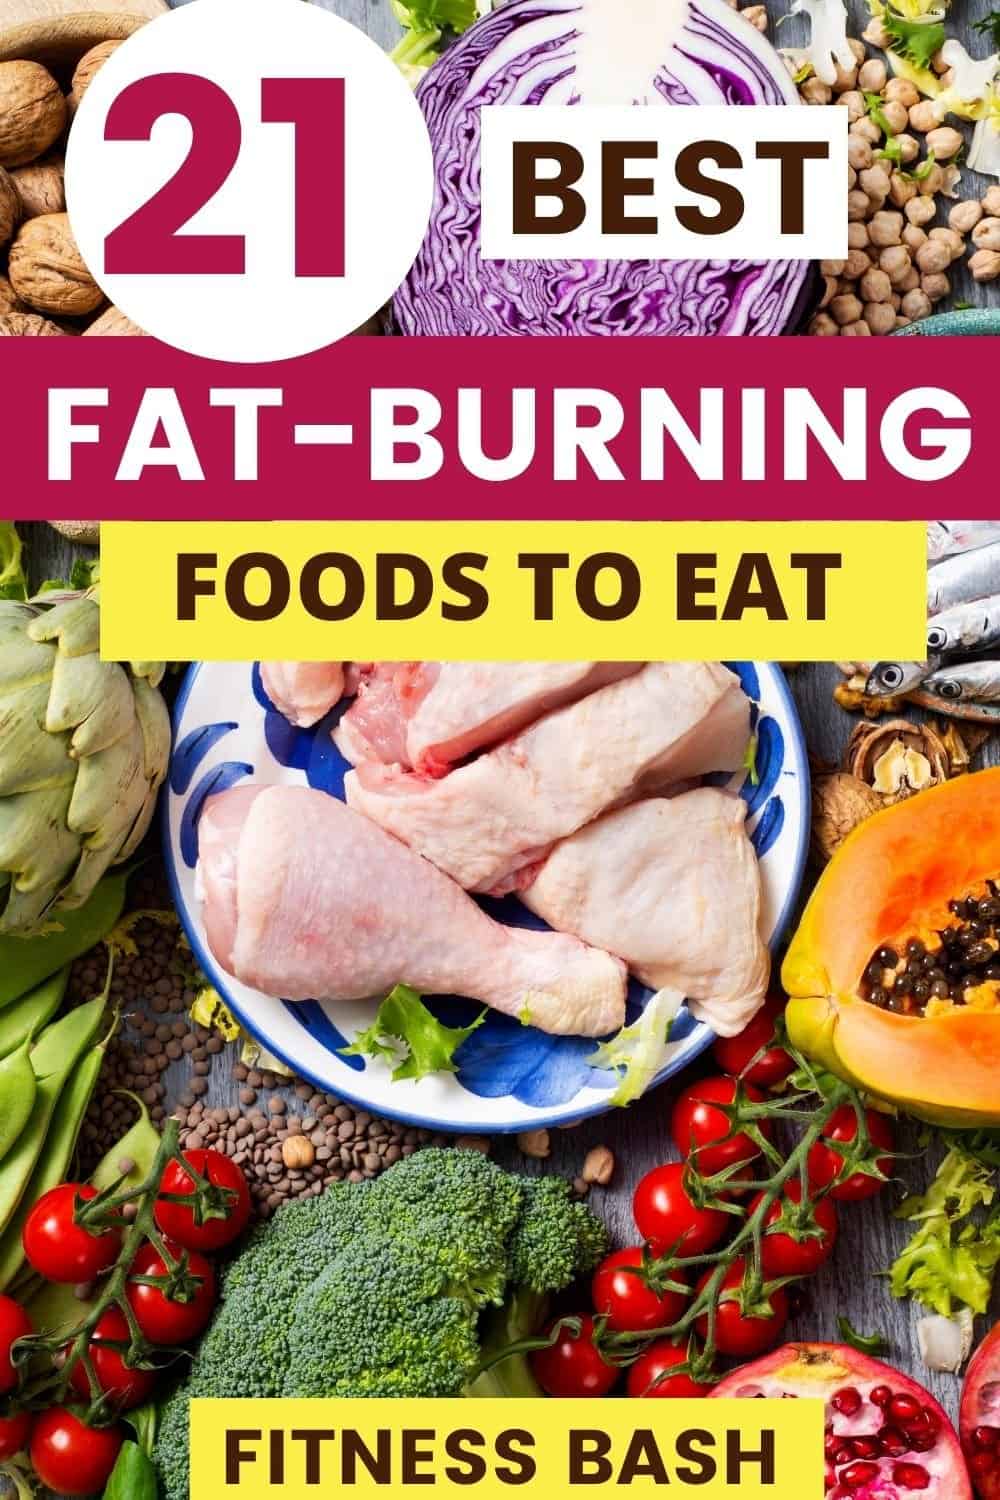 FAT BURNING FOODS